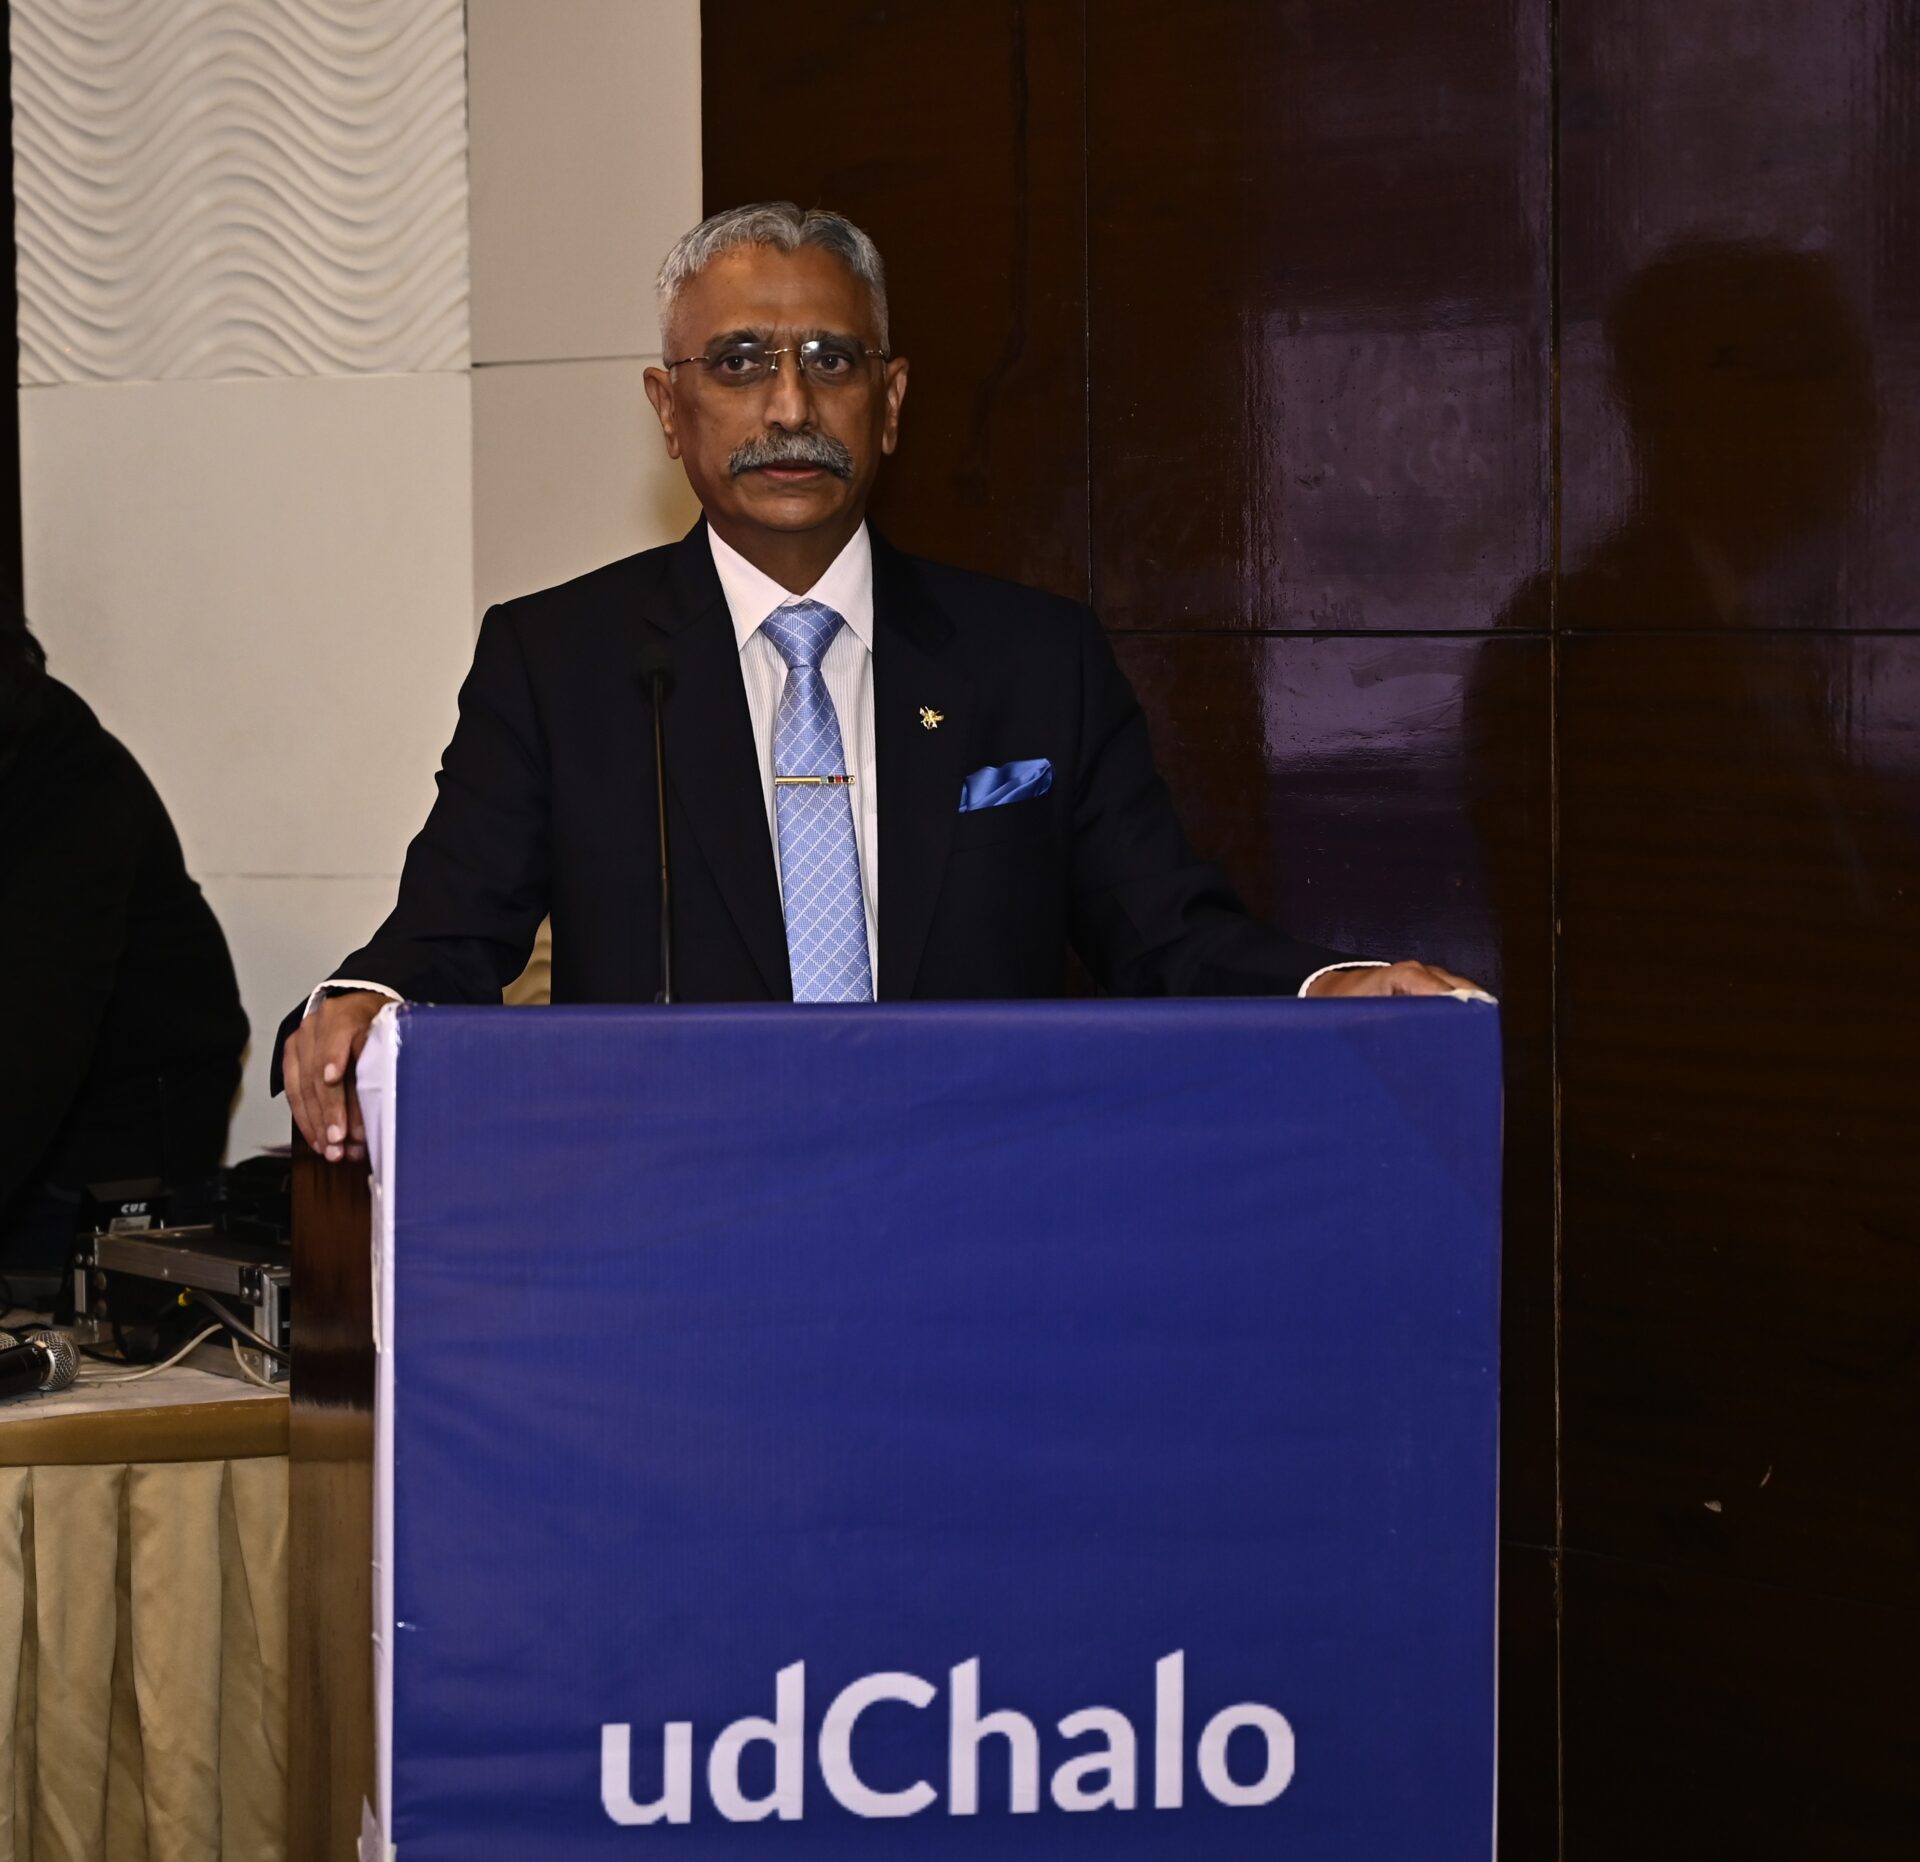 udChalo appoints General Manoj Mukund Naravane as Advisory Board Member